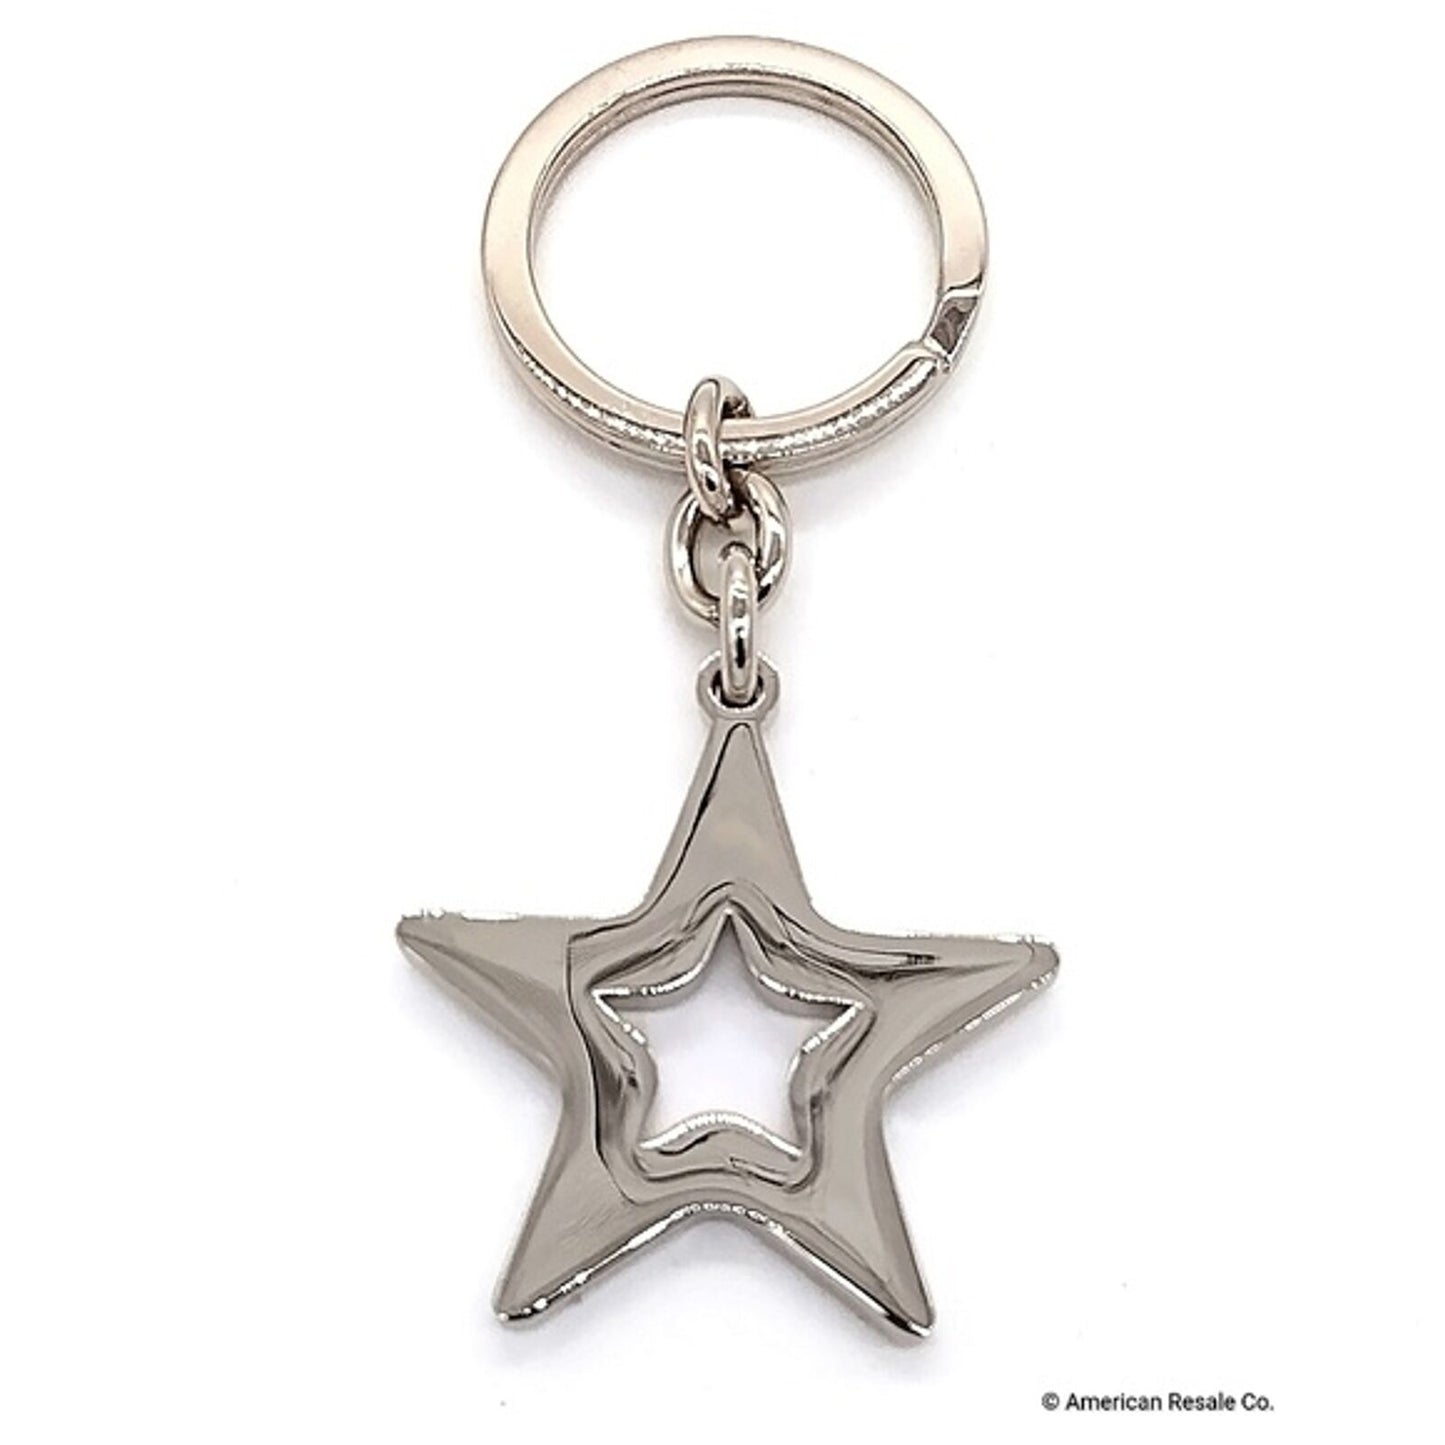 Rare COACH White Star Enamel Signature Fob Keychain Purse Charm Accessory #7358